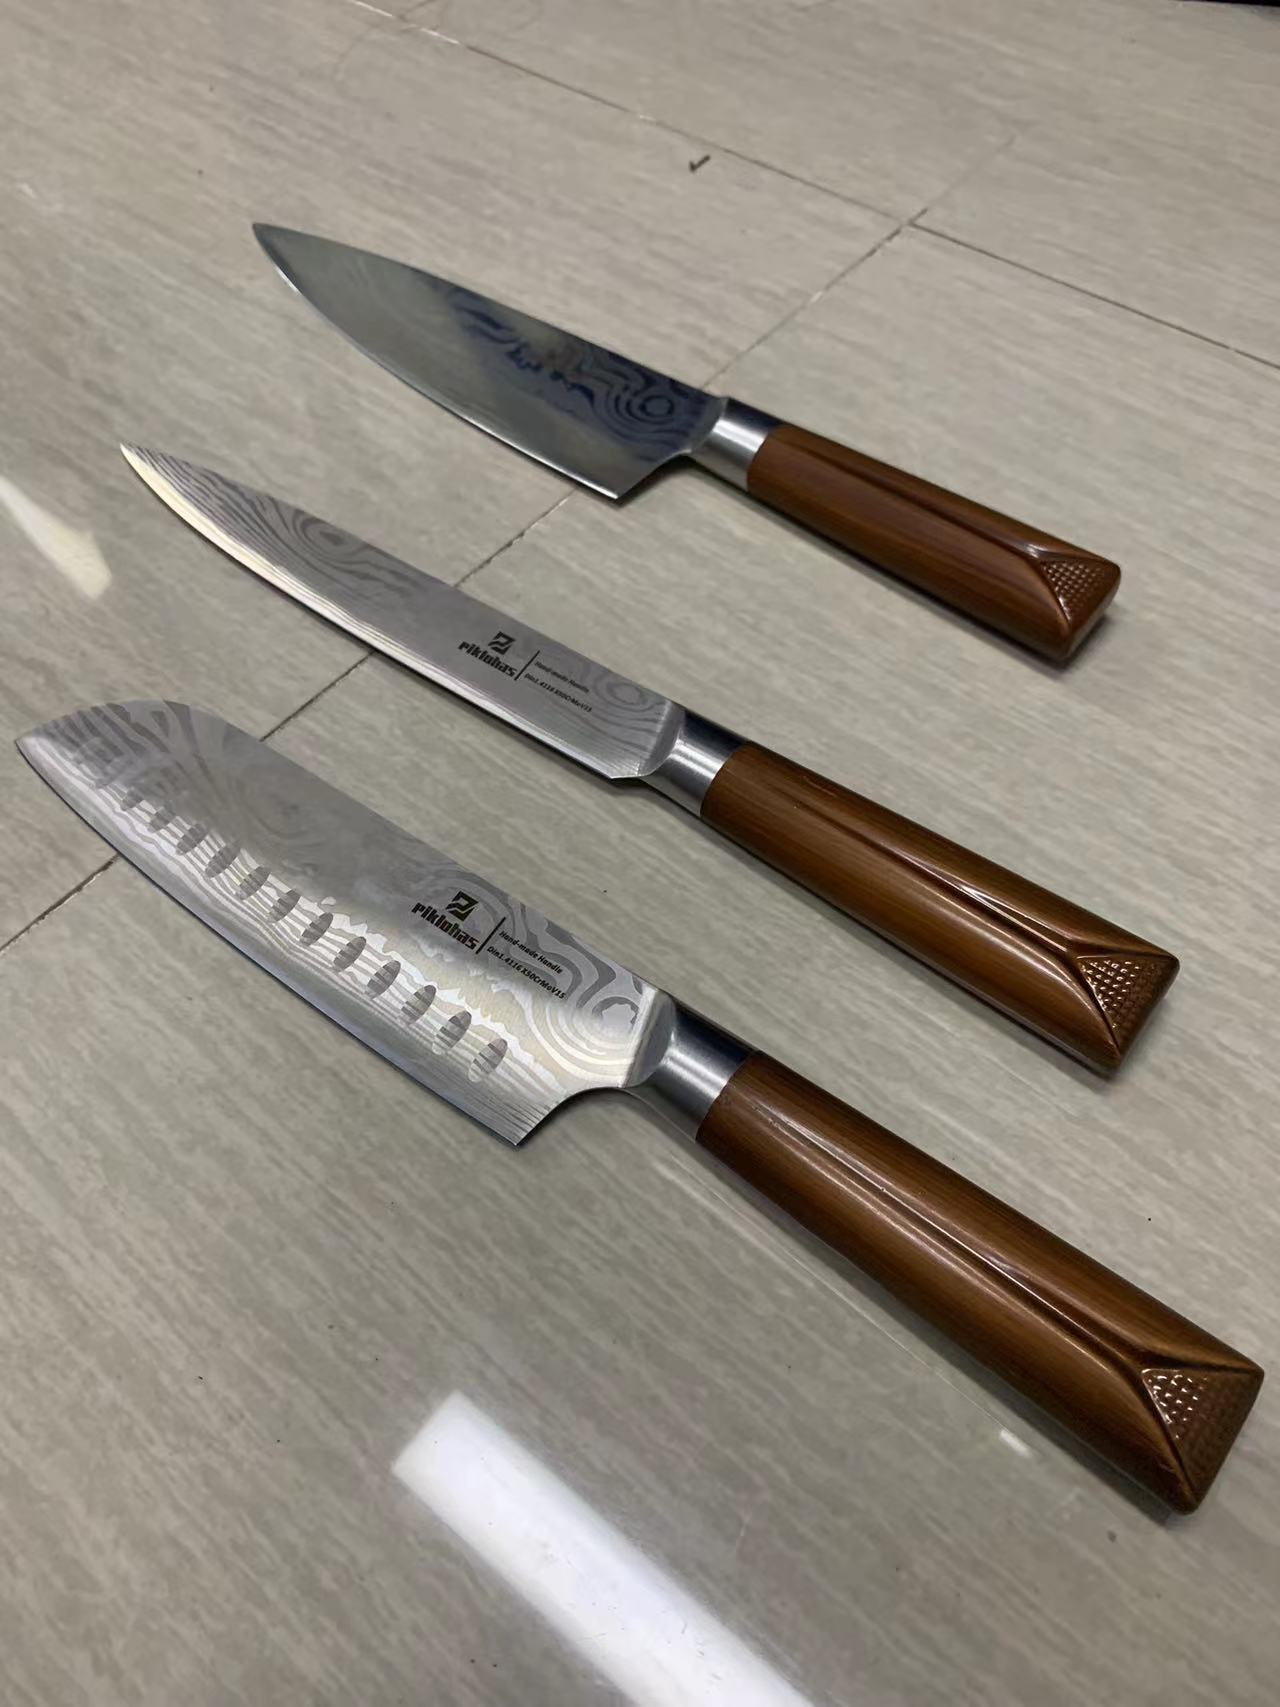  Piklohas Steak Knives Set Of 8 With Drawer Organizer